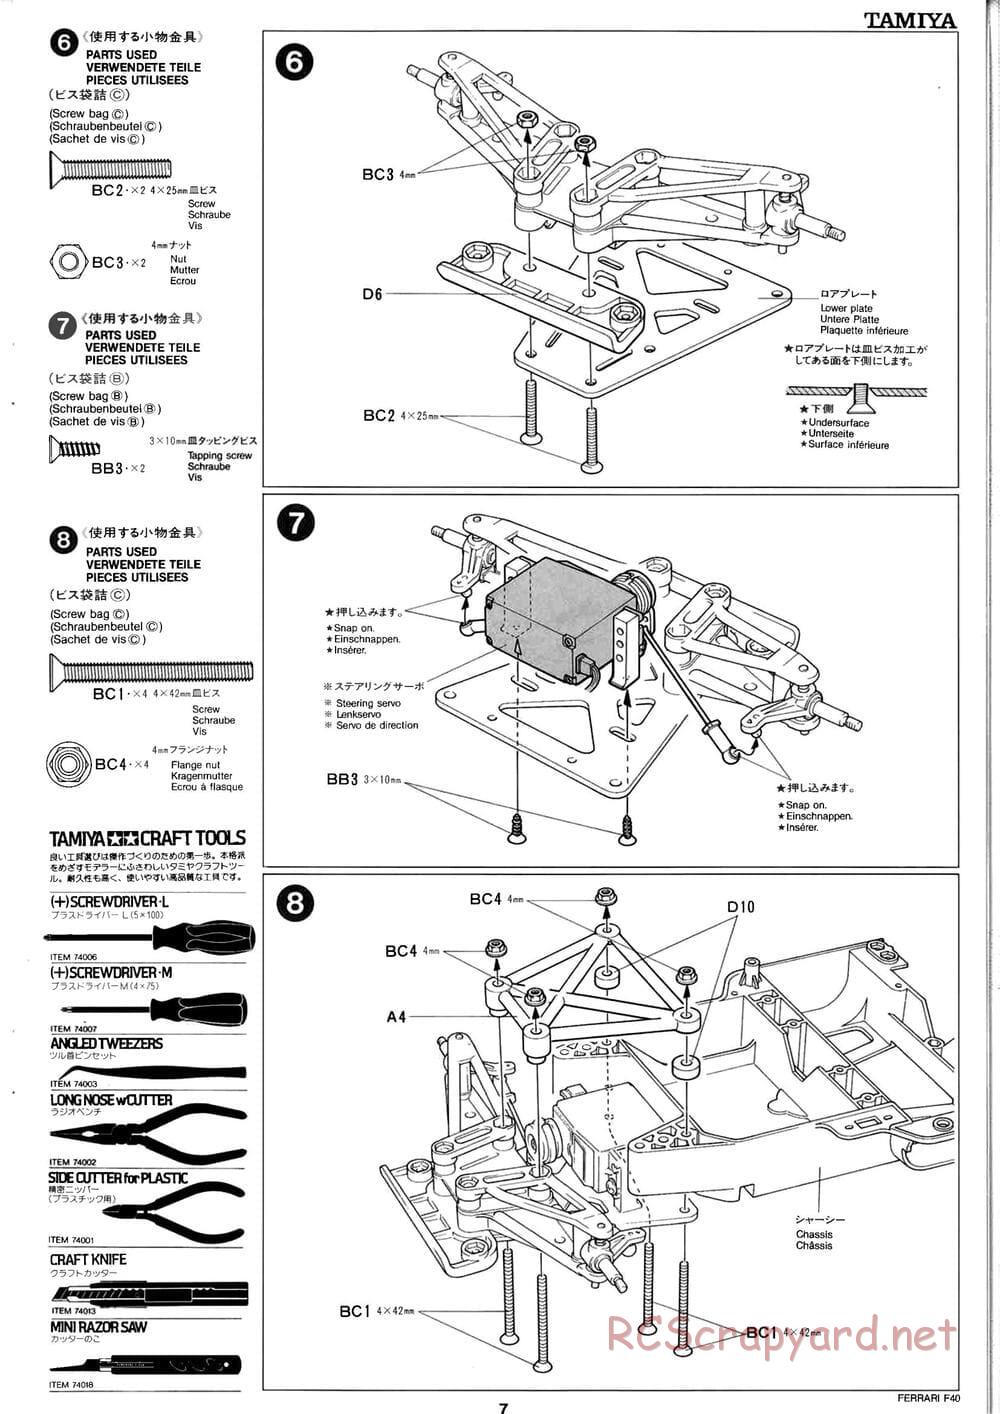 Tamiya - Ferrari F40 - Group-C Chassis - Manual - Page 7